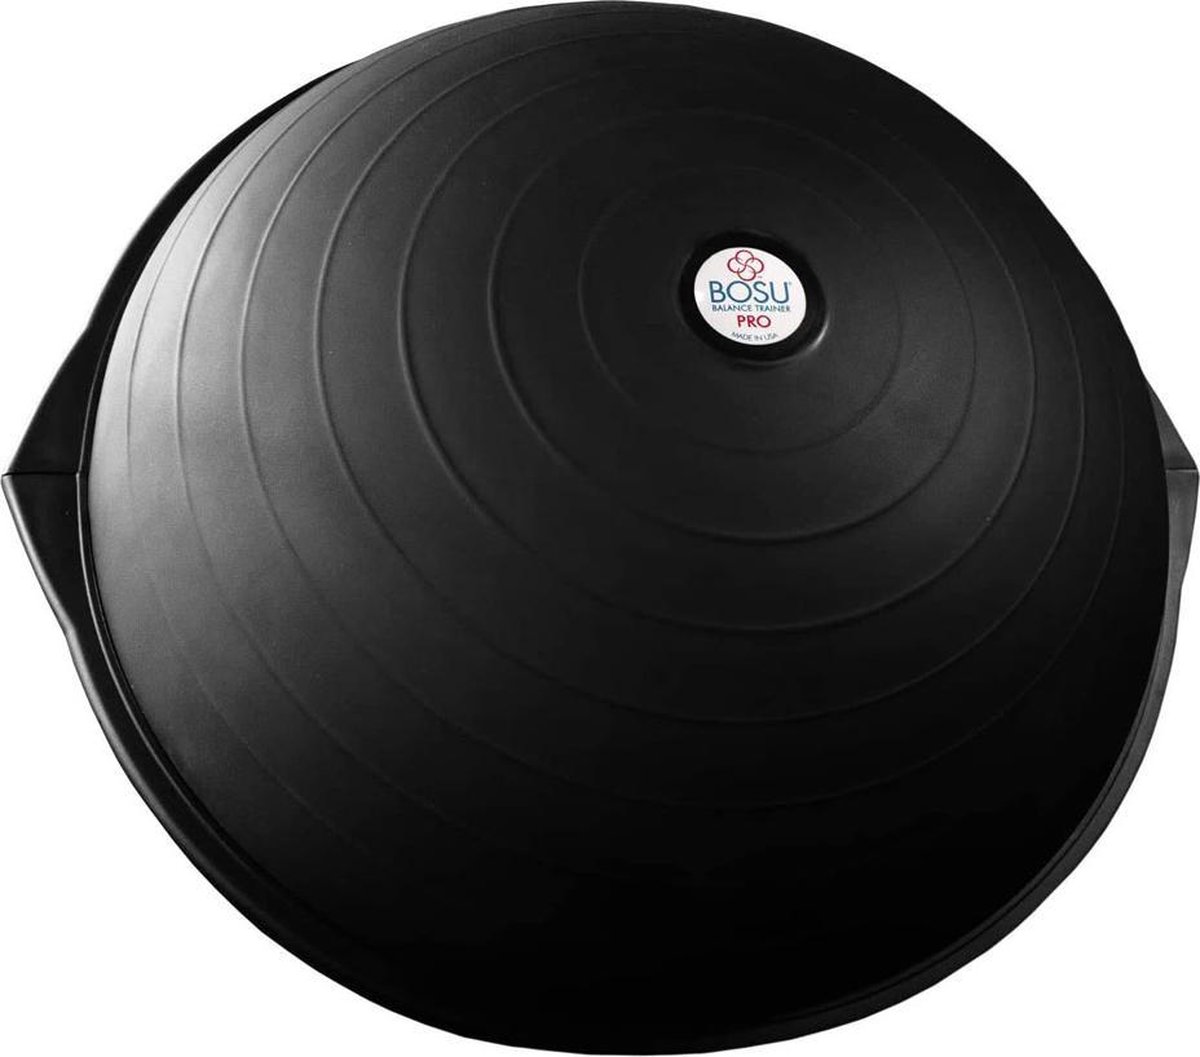 Bosu balance trainer PRO edition - Limited Black Edition  350010-black